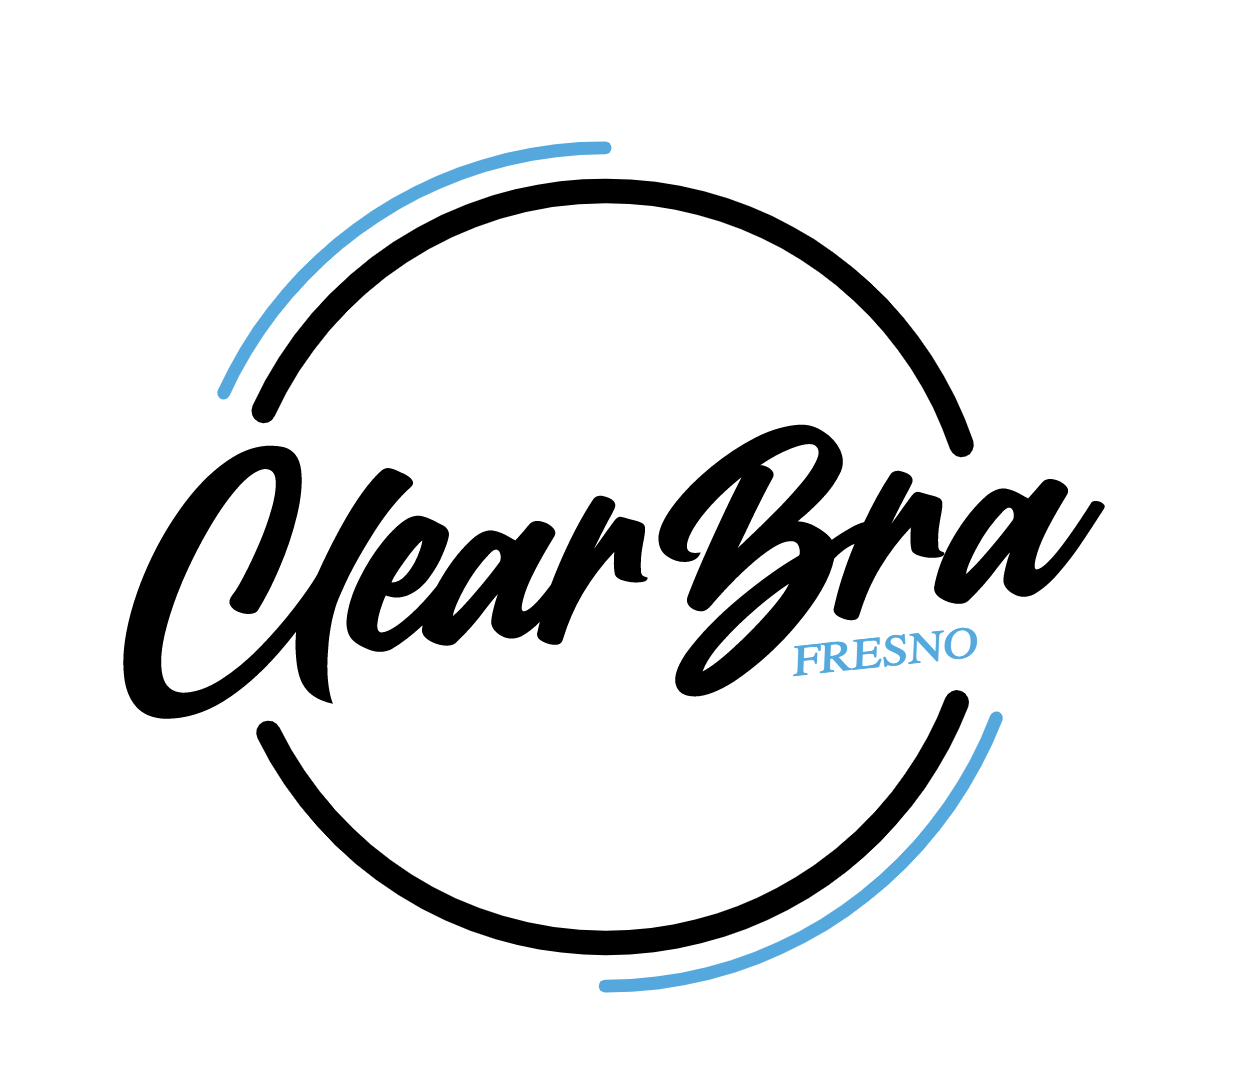 Clear-Bra-Fresno-Logo.jpg